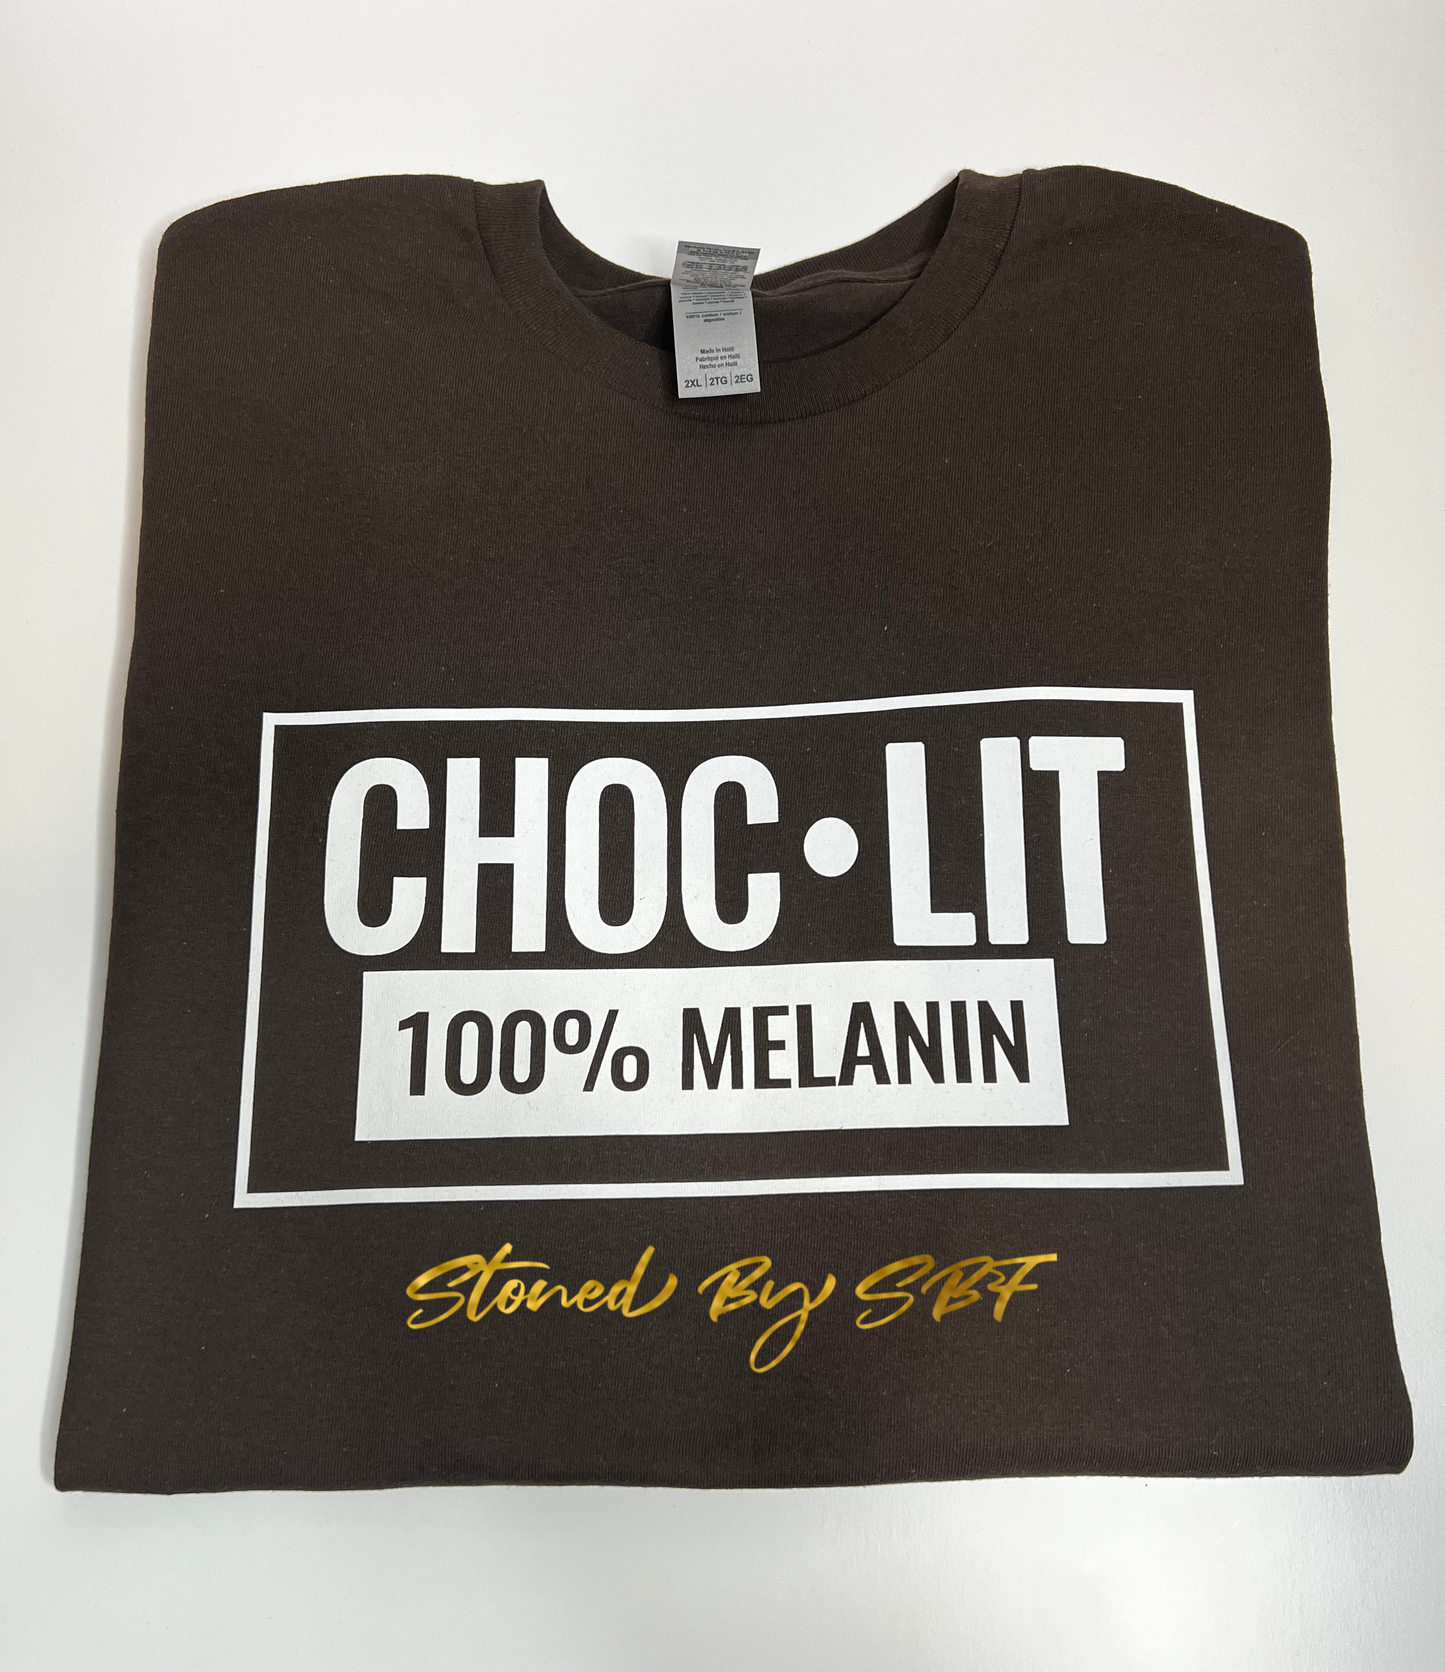 Choc-Lit 100% Melanin